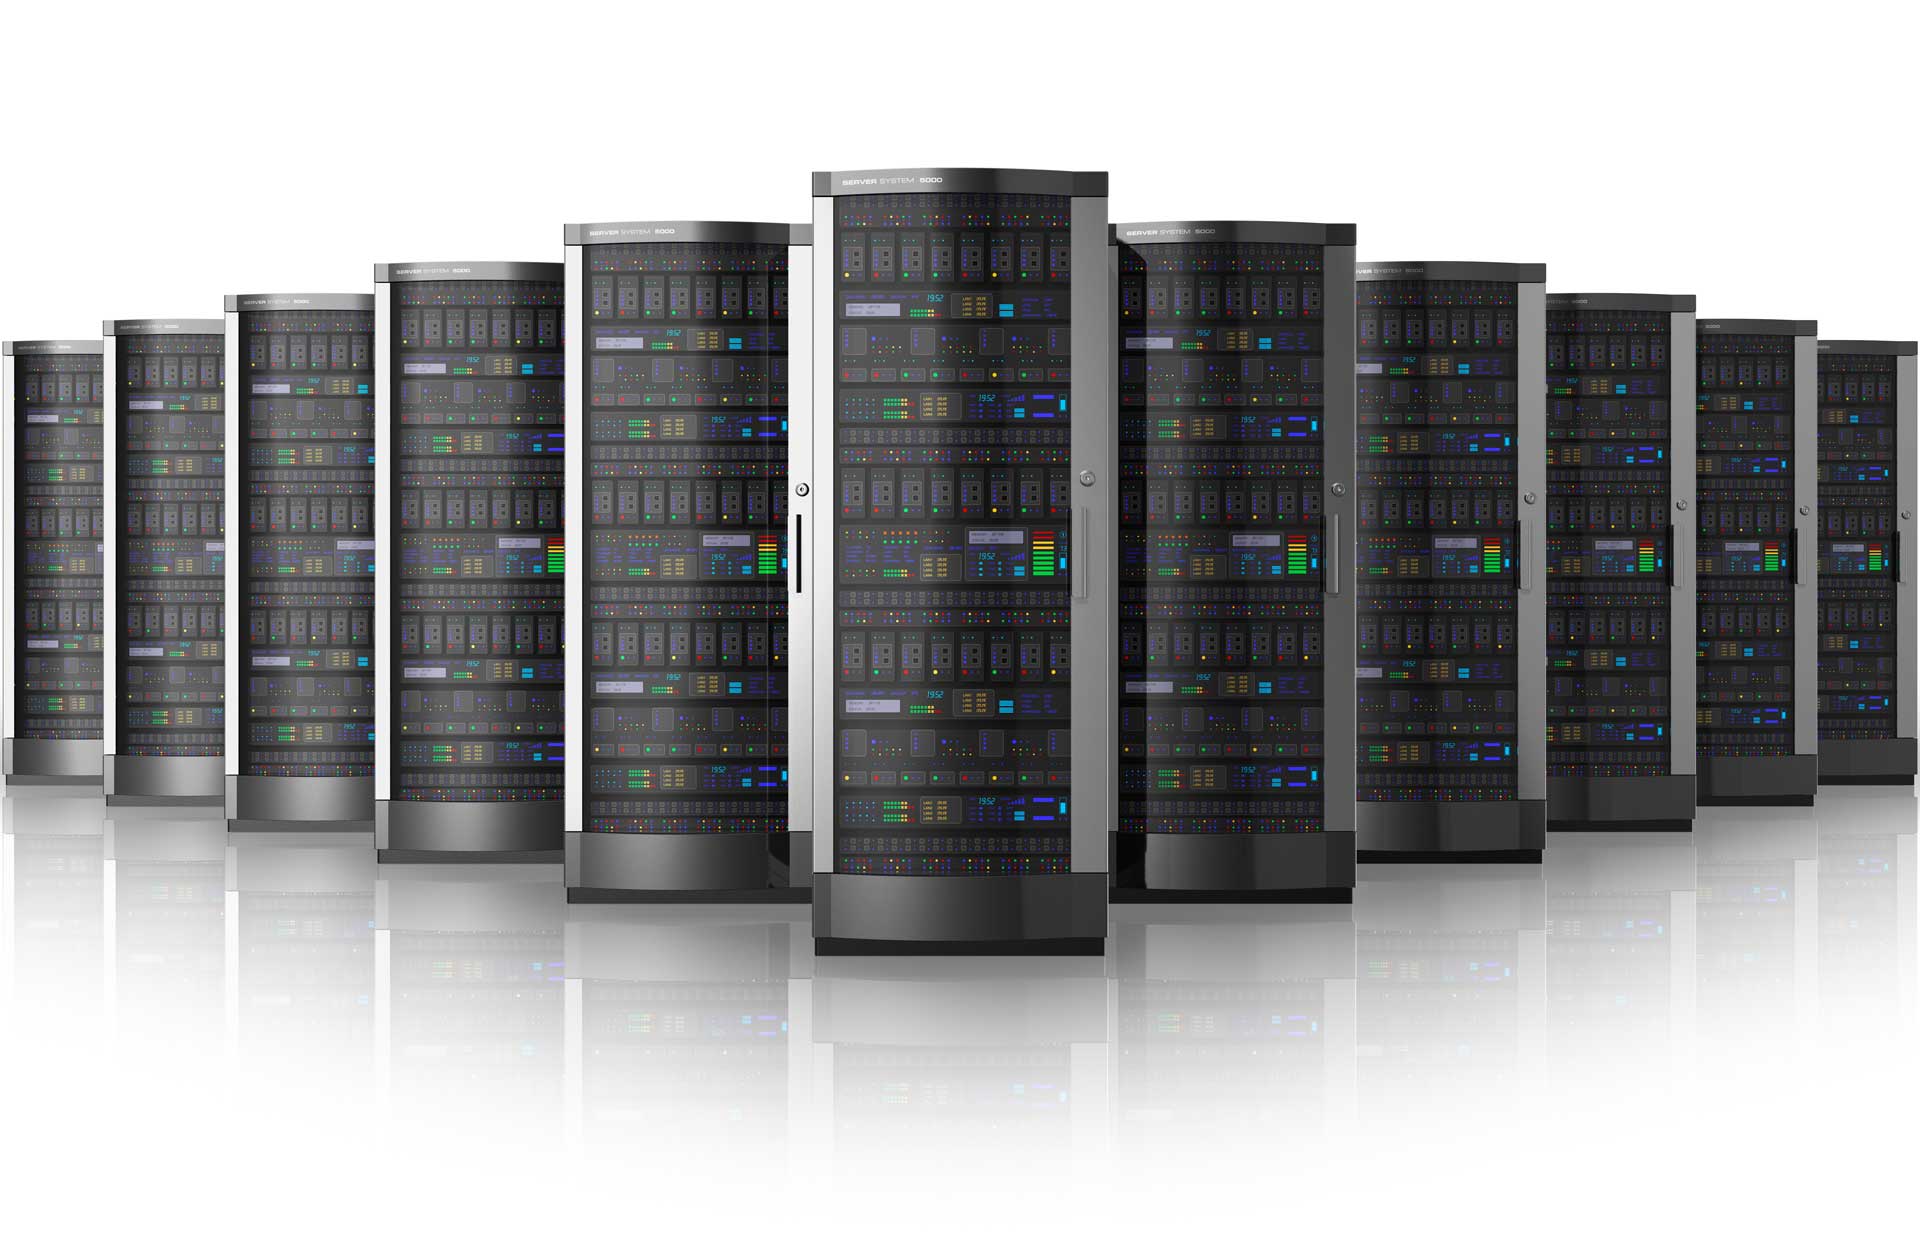  Midrange IBM Servers